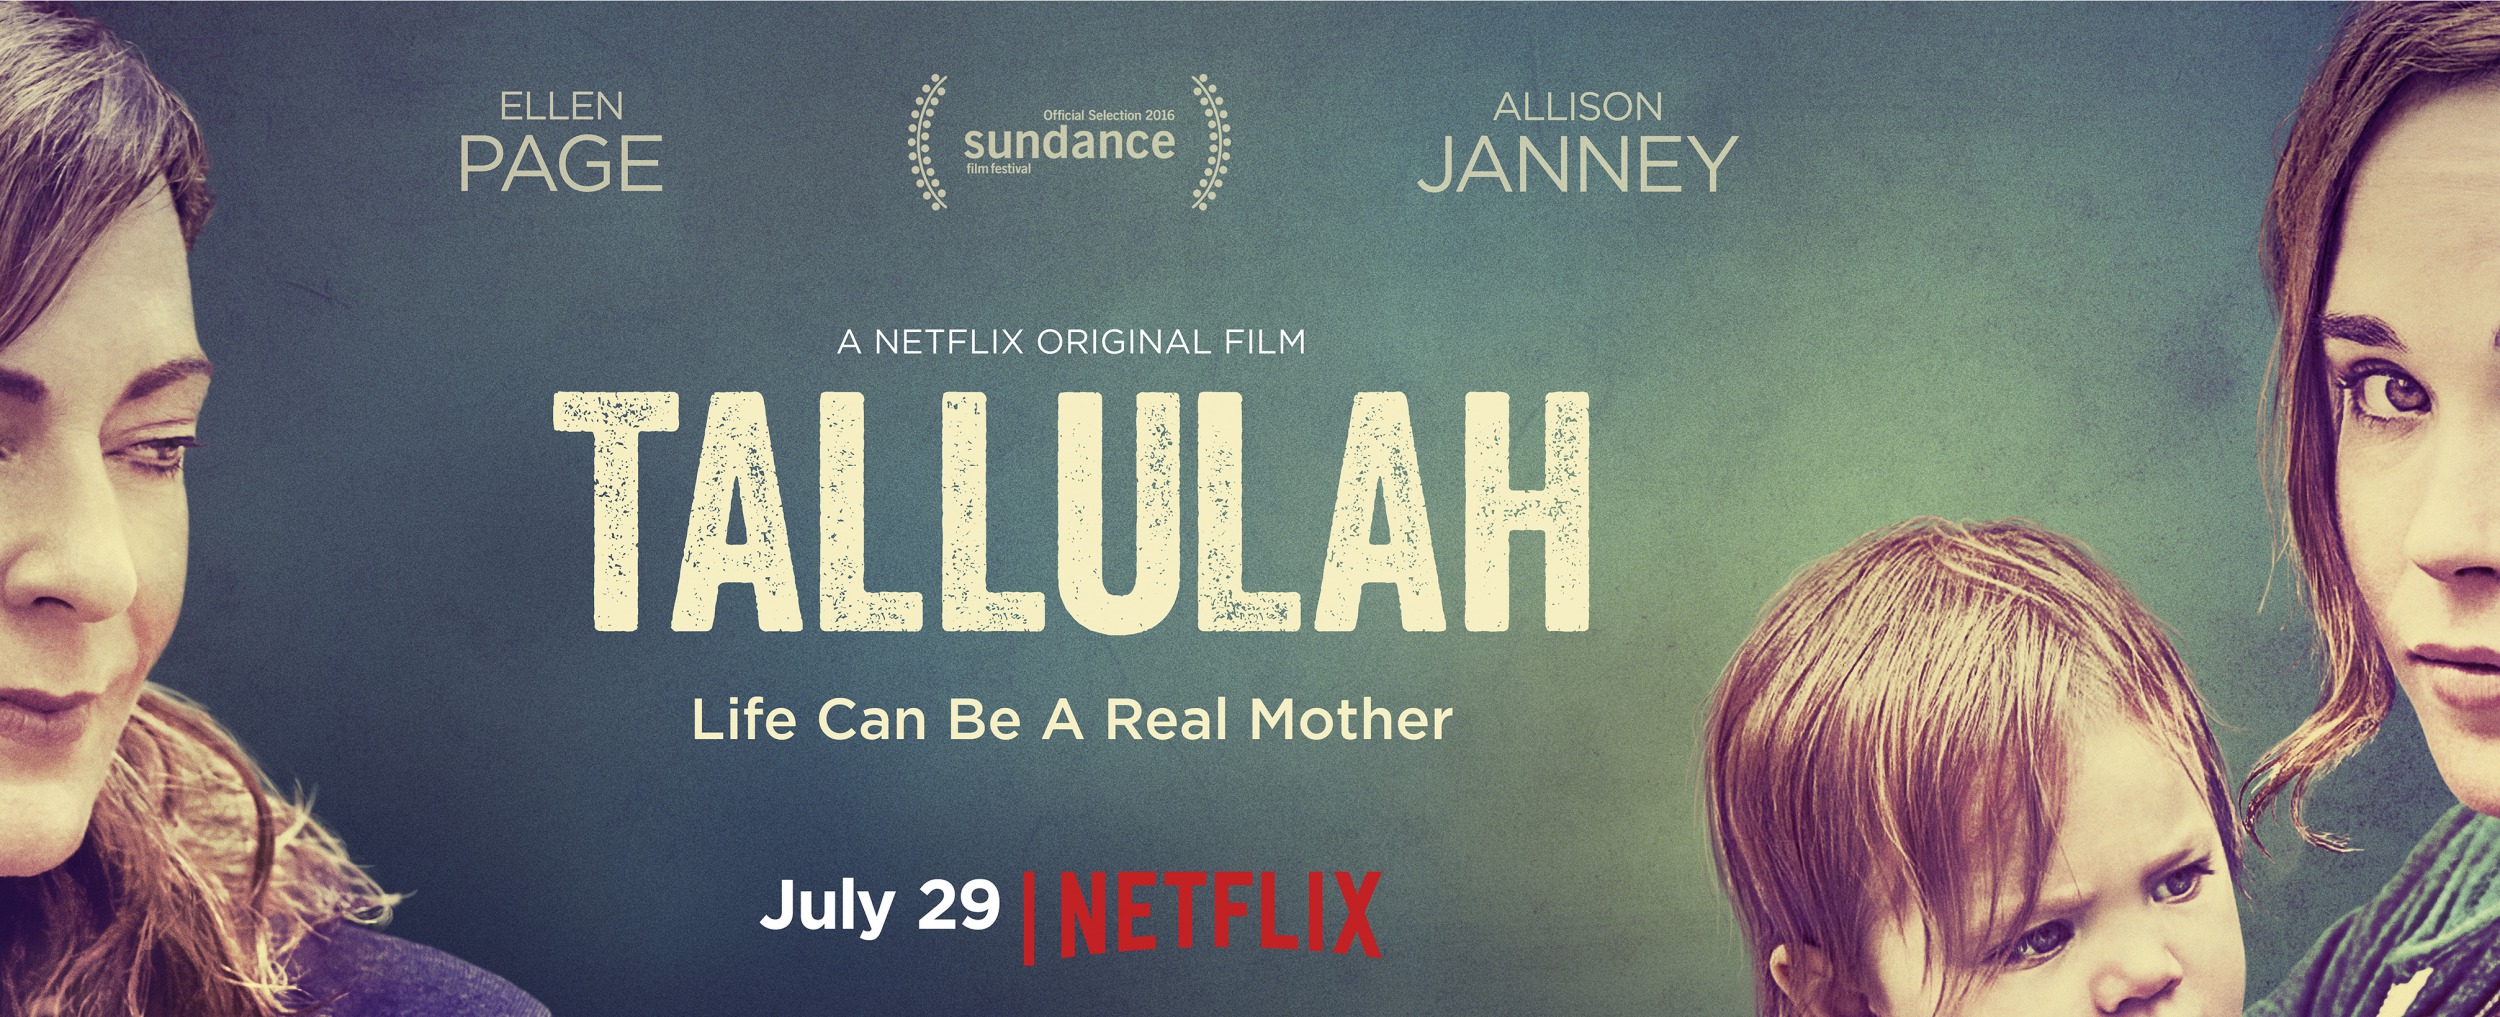 Mega Sized TV Poster Image for Tallulah (#2 of 2)